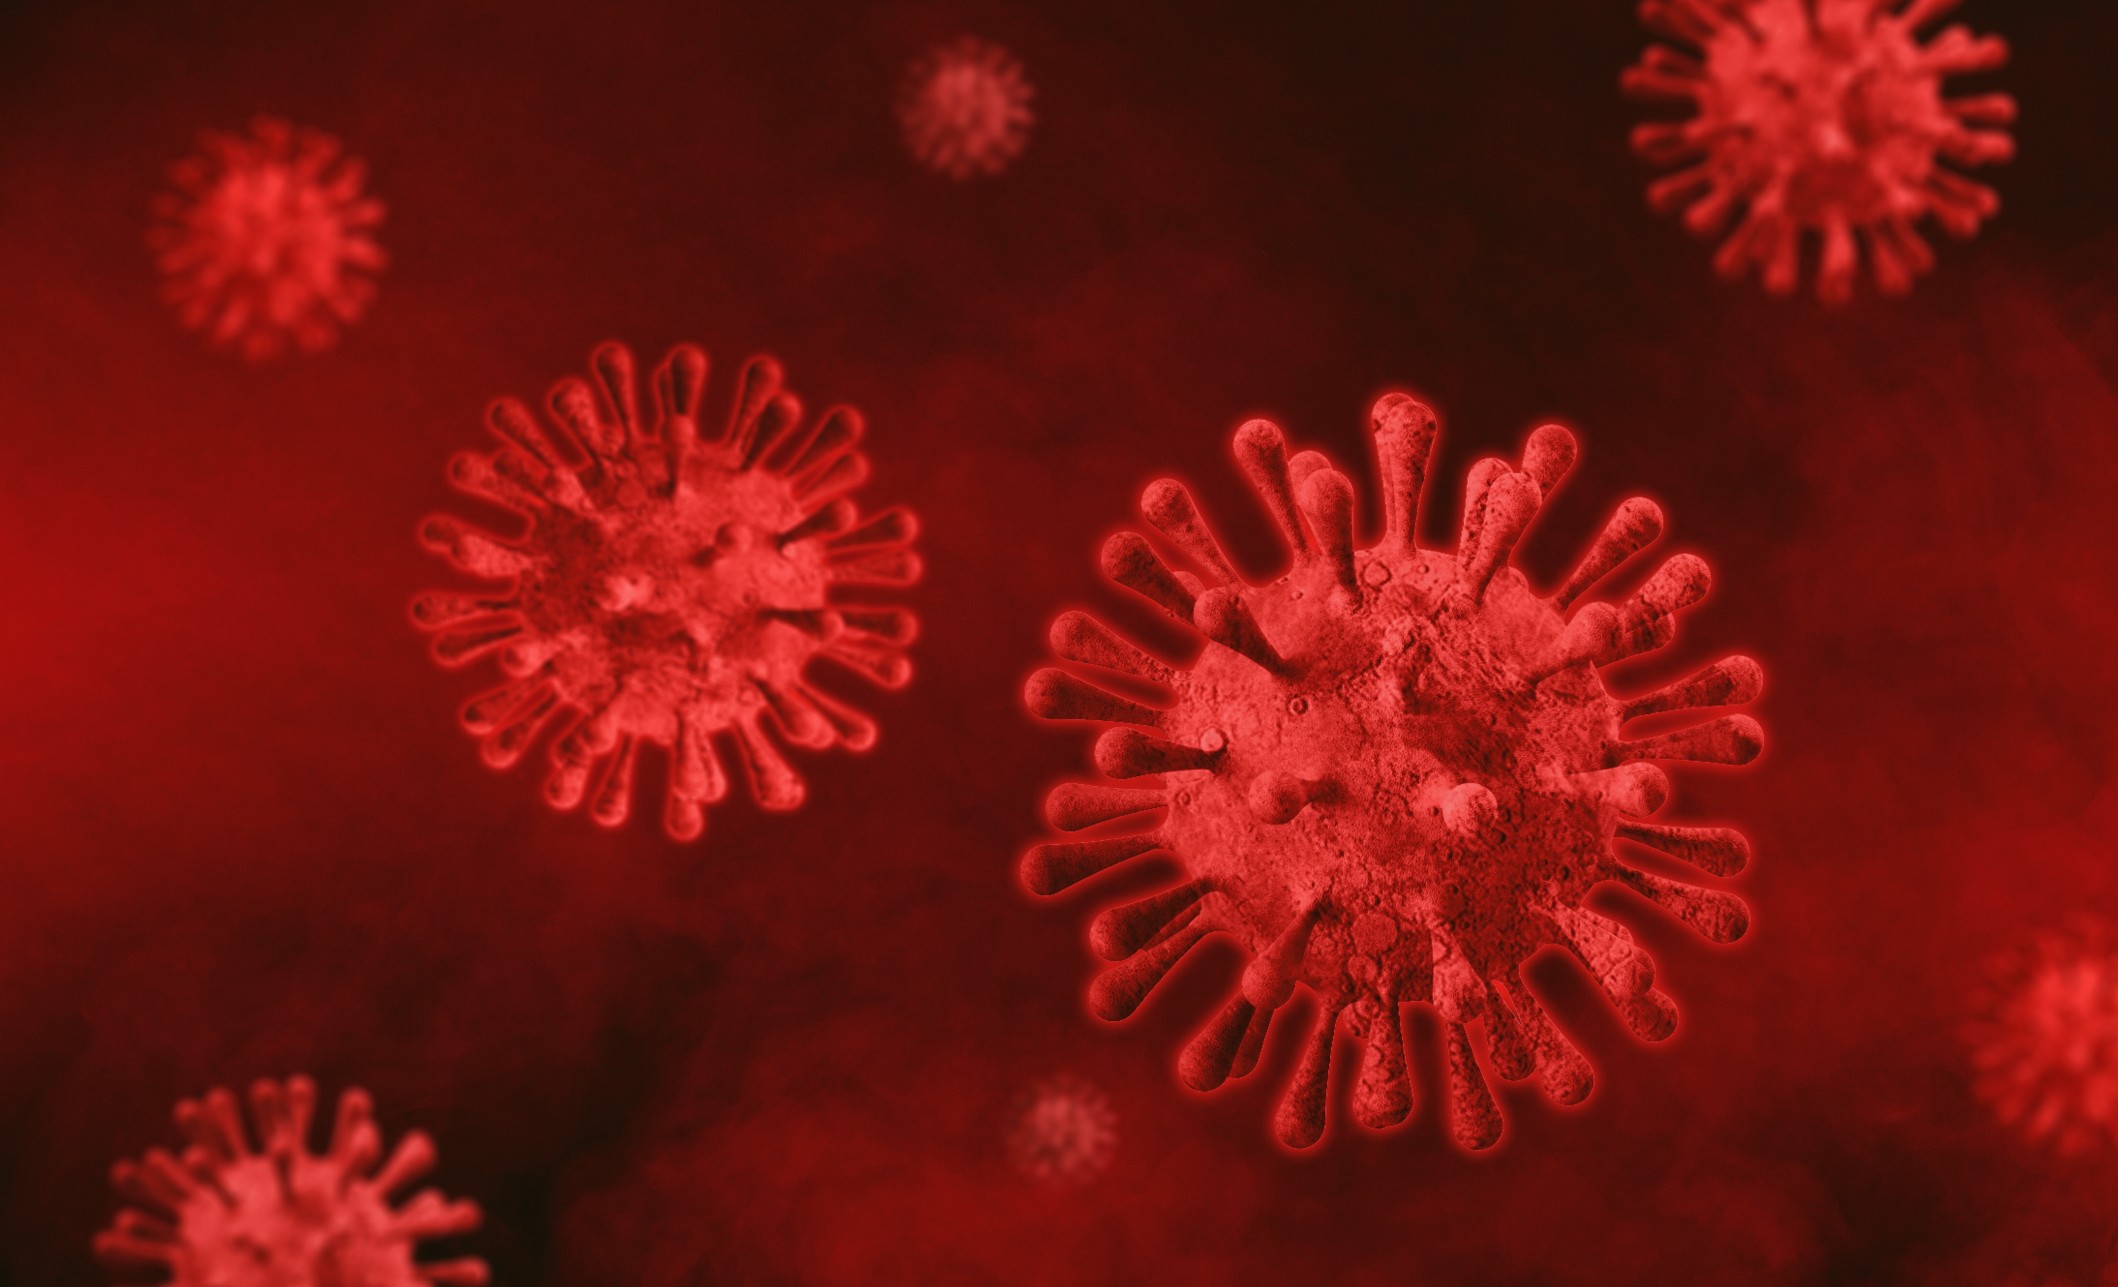 copy-space-red-corona-background-render-virus-3d-coronavirus-covid-19-covid19_t20_omwLB8